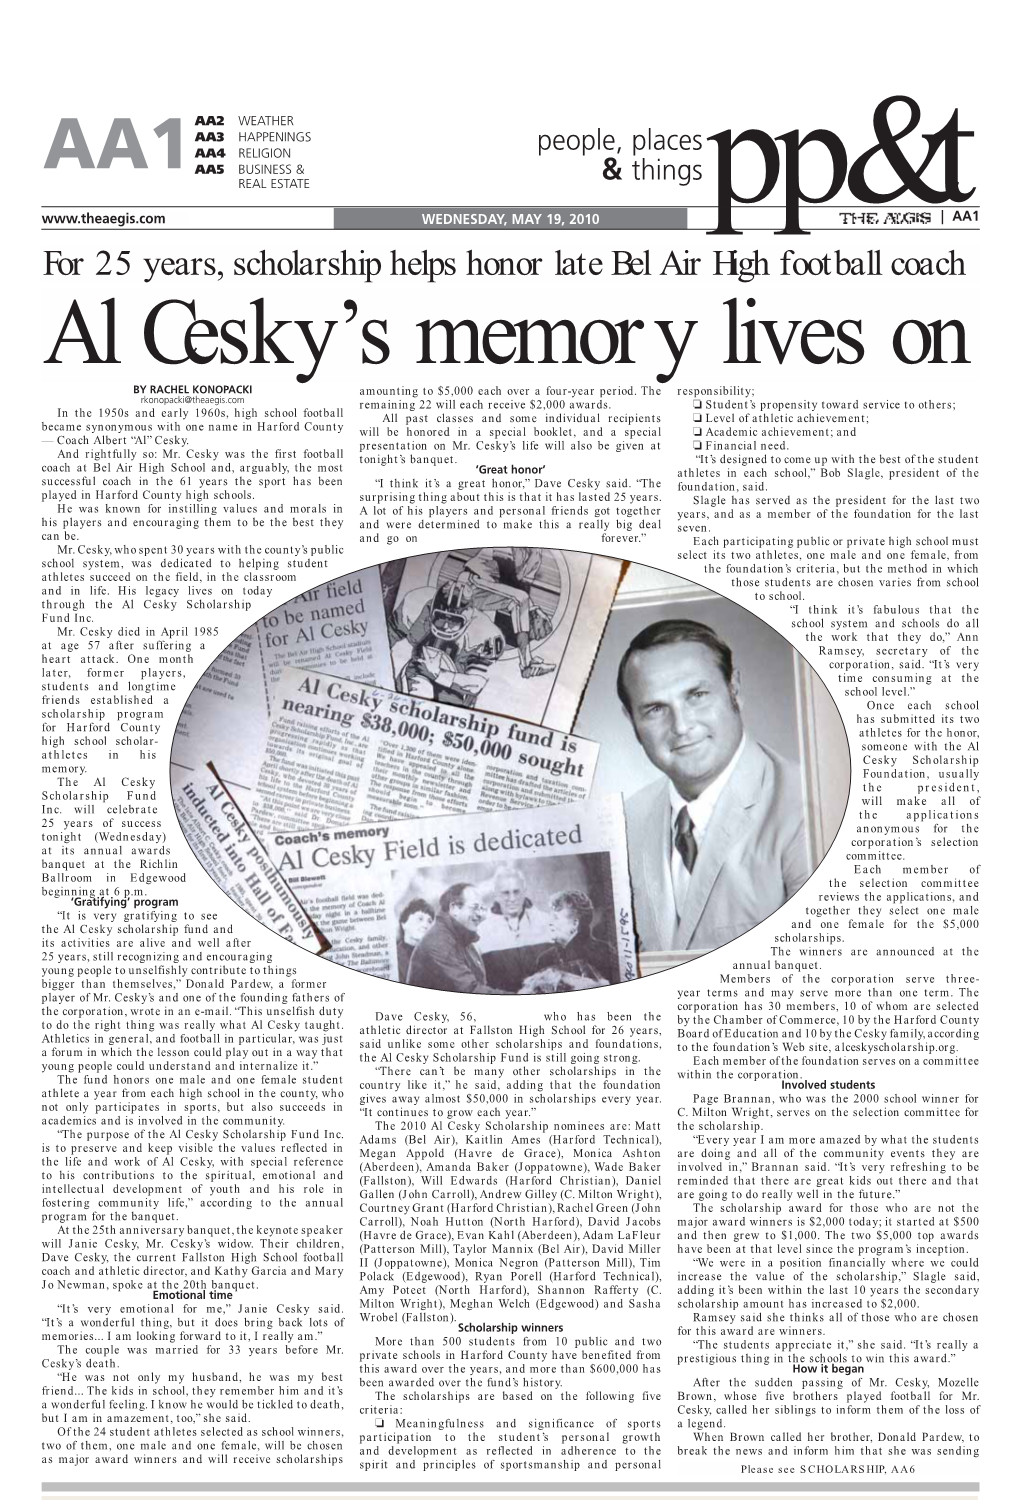 Al Cesky's Memory Lives On